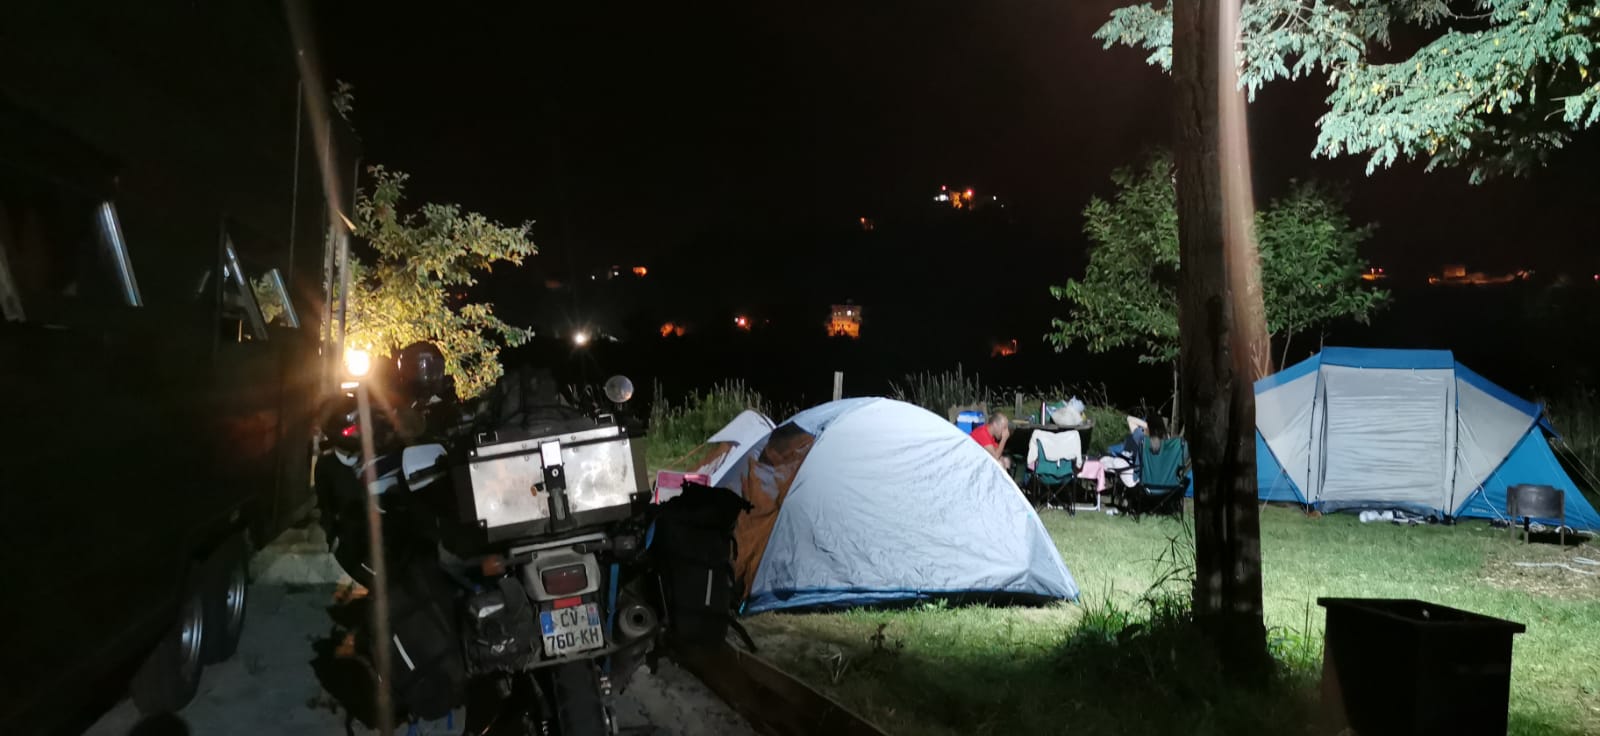 danzi-camping-kamp-alani (12)